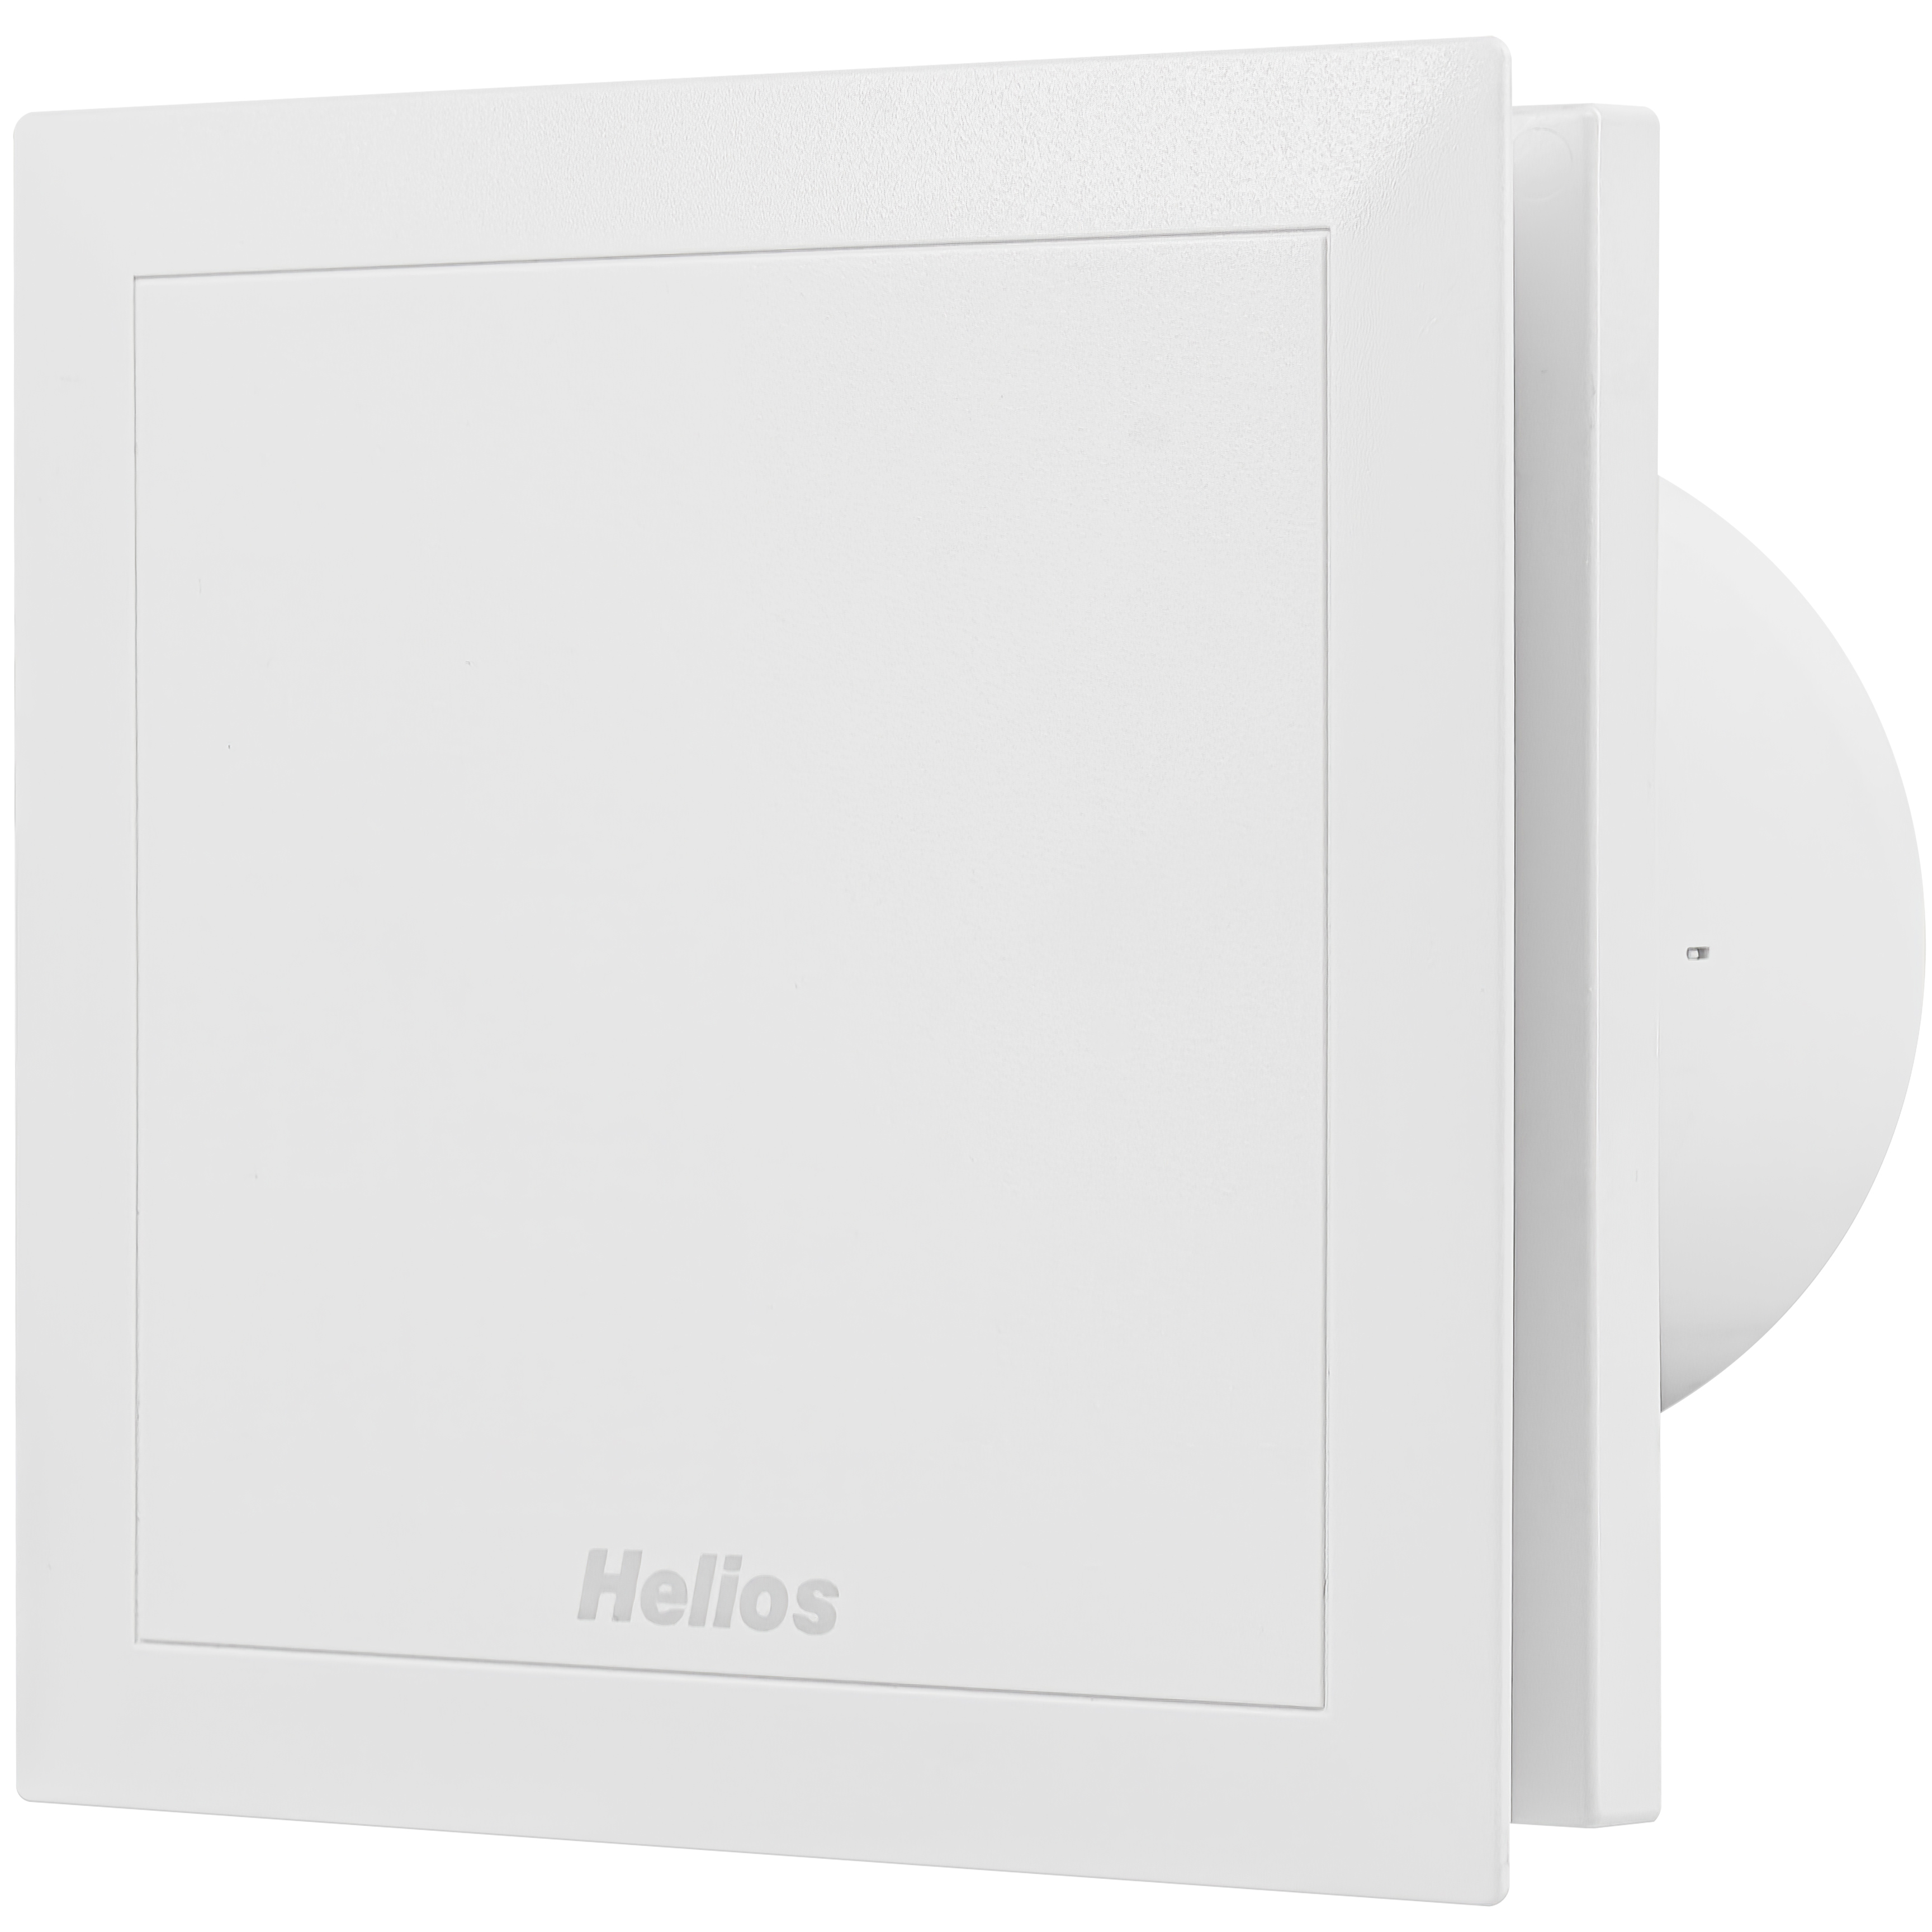 Цена вентилятор helios с таймером выключения Helios MiniVent M1/100 N/C в Киеве